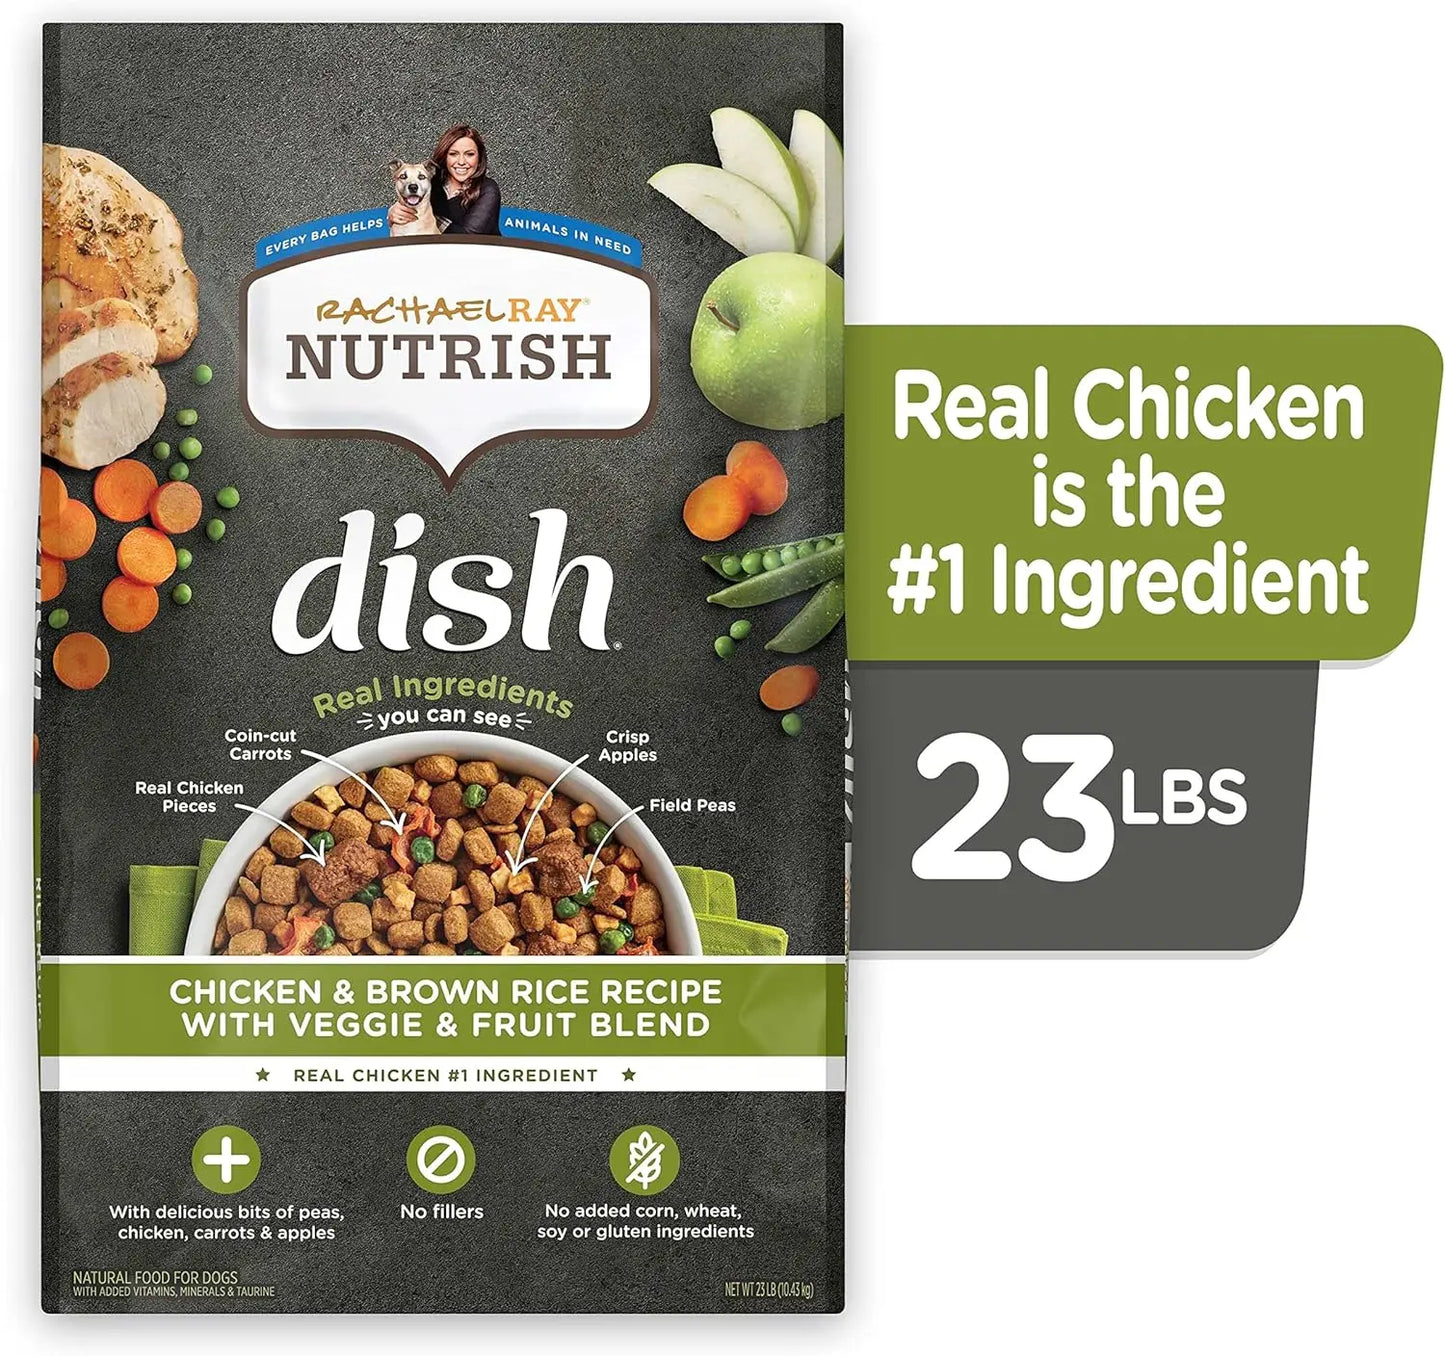 Rachael Ray Nutrish Dish Premium Dry Dog Food, Chicken & Brown Rice Recipe with Veggies & Fruit, 23 Pound Bag